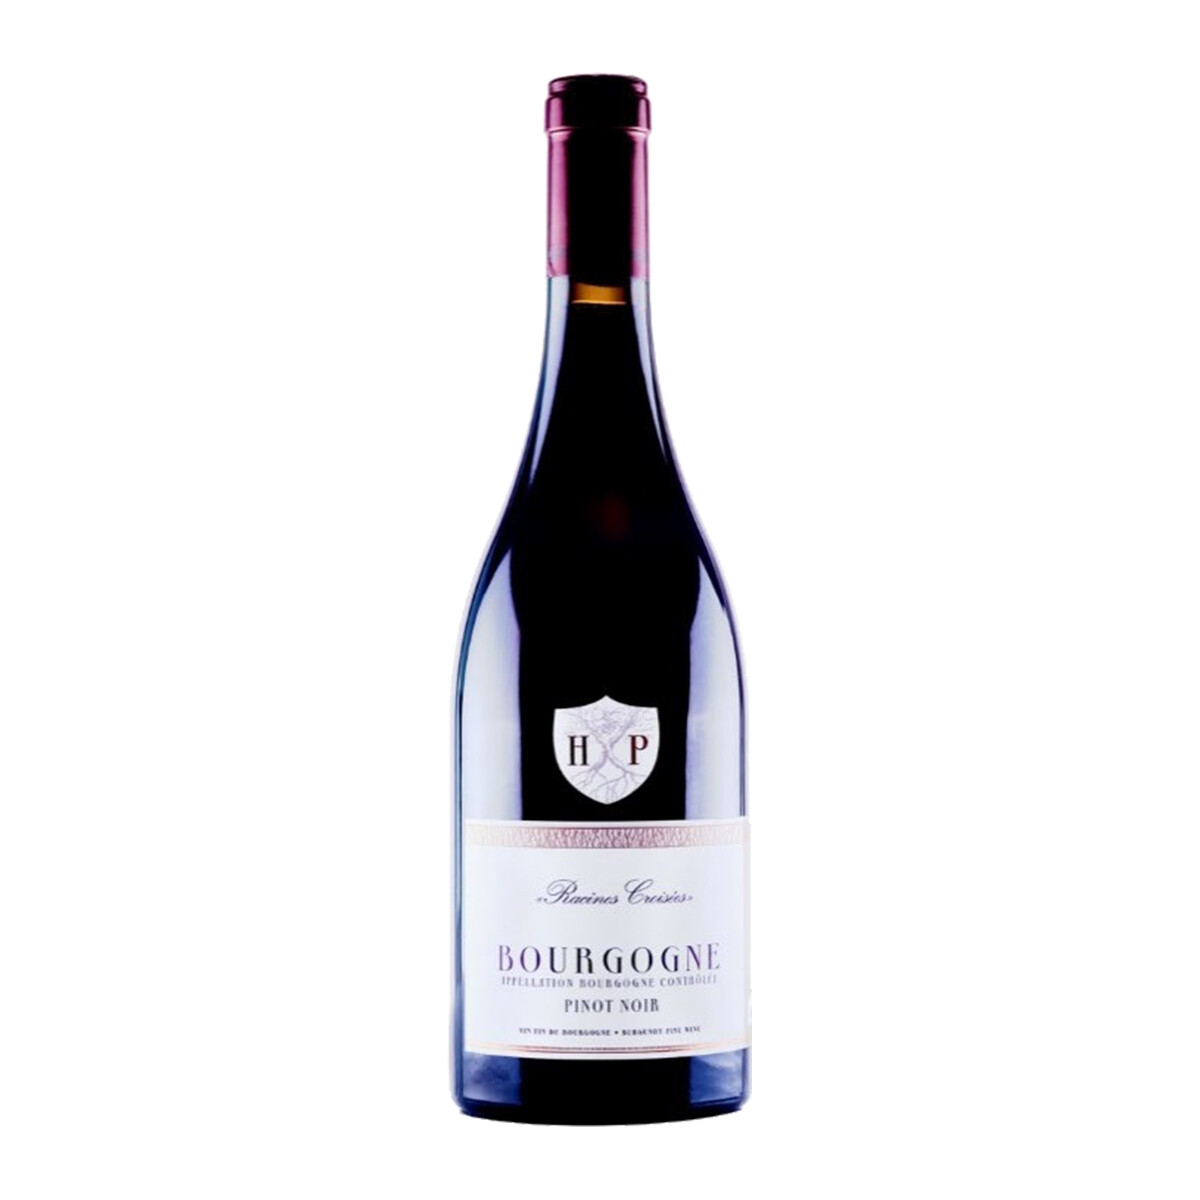 Henri Pion Racines Croisees Bourgogne Pinot Noir 2017